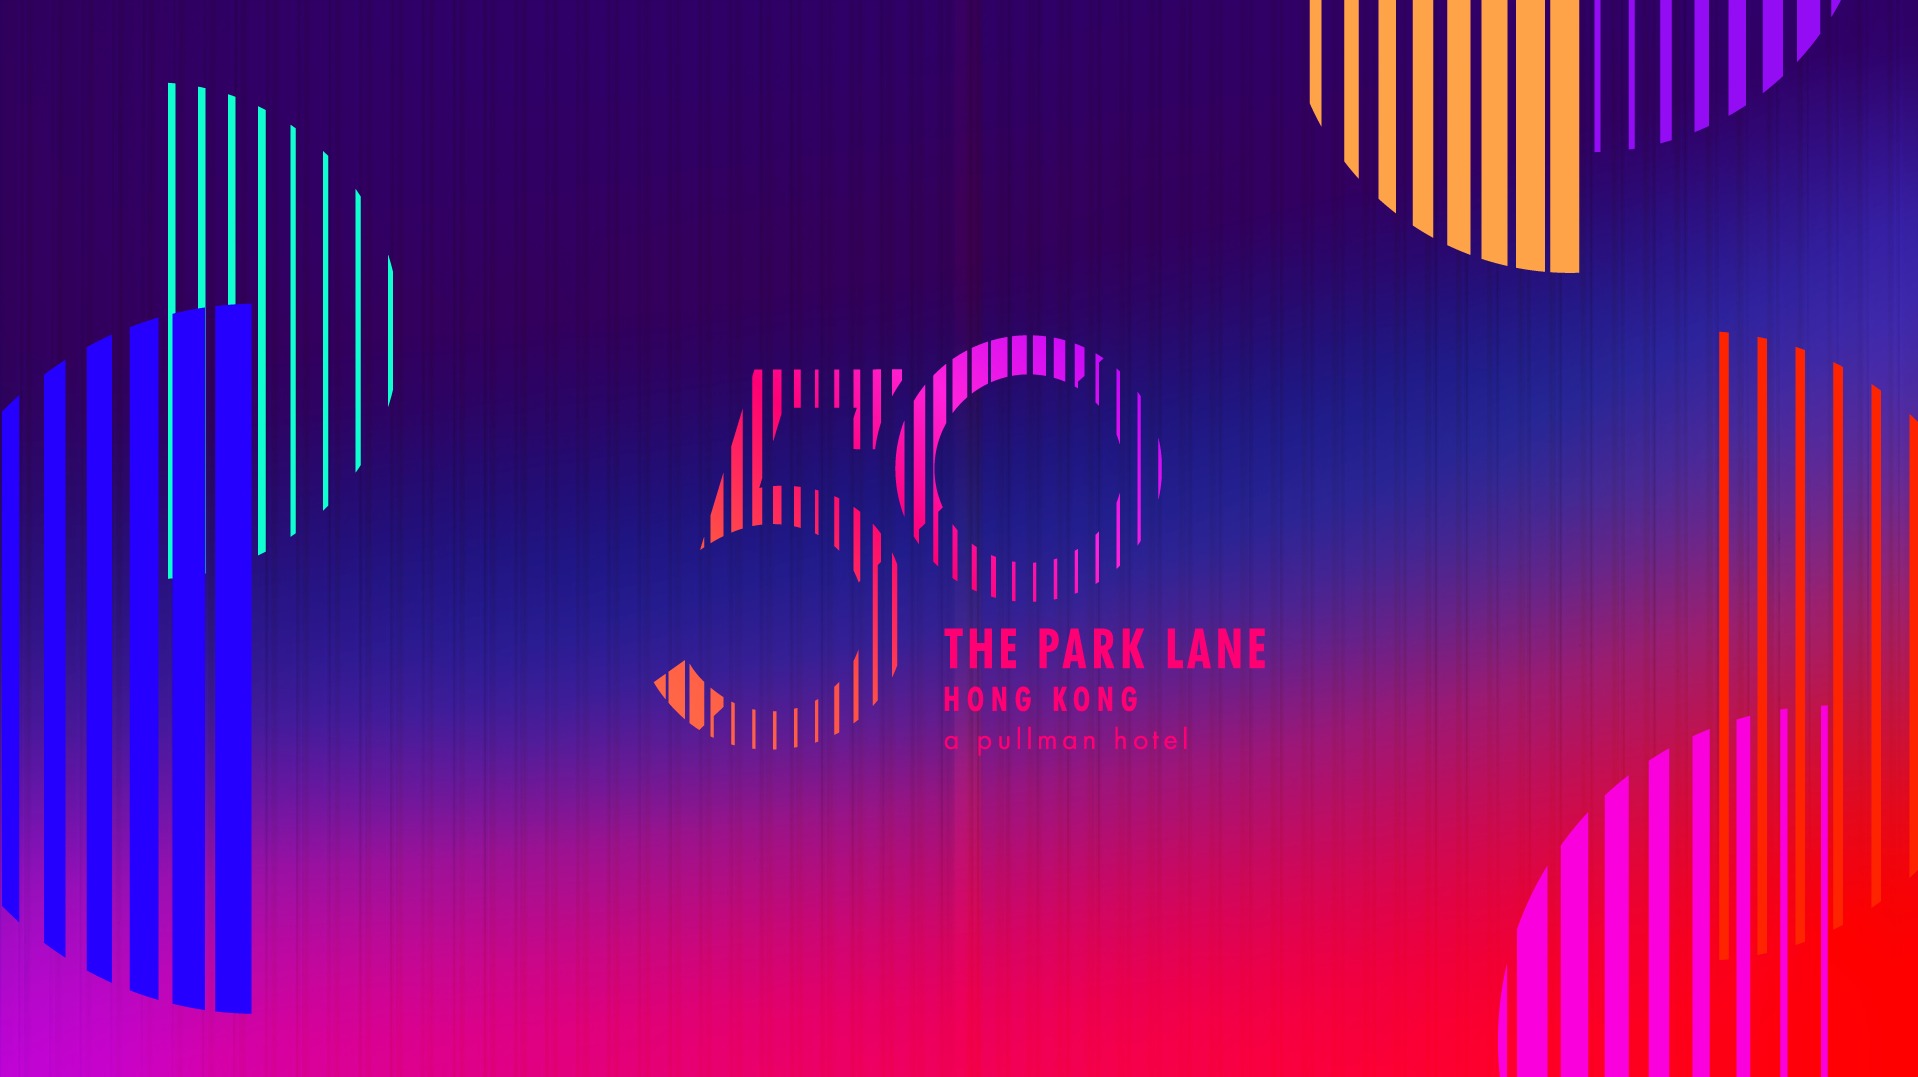 The Park Lane Hong Kong 50th Anniversary announcement image